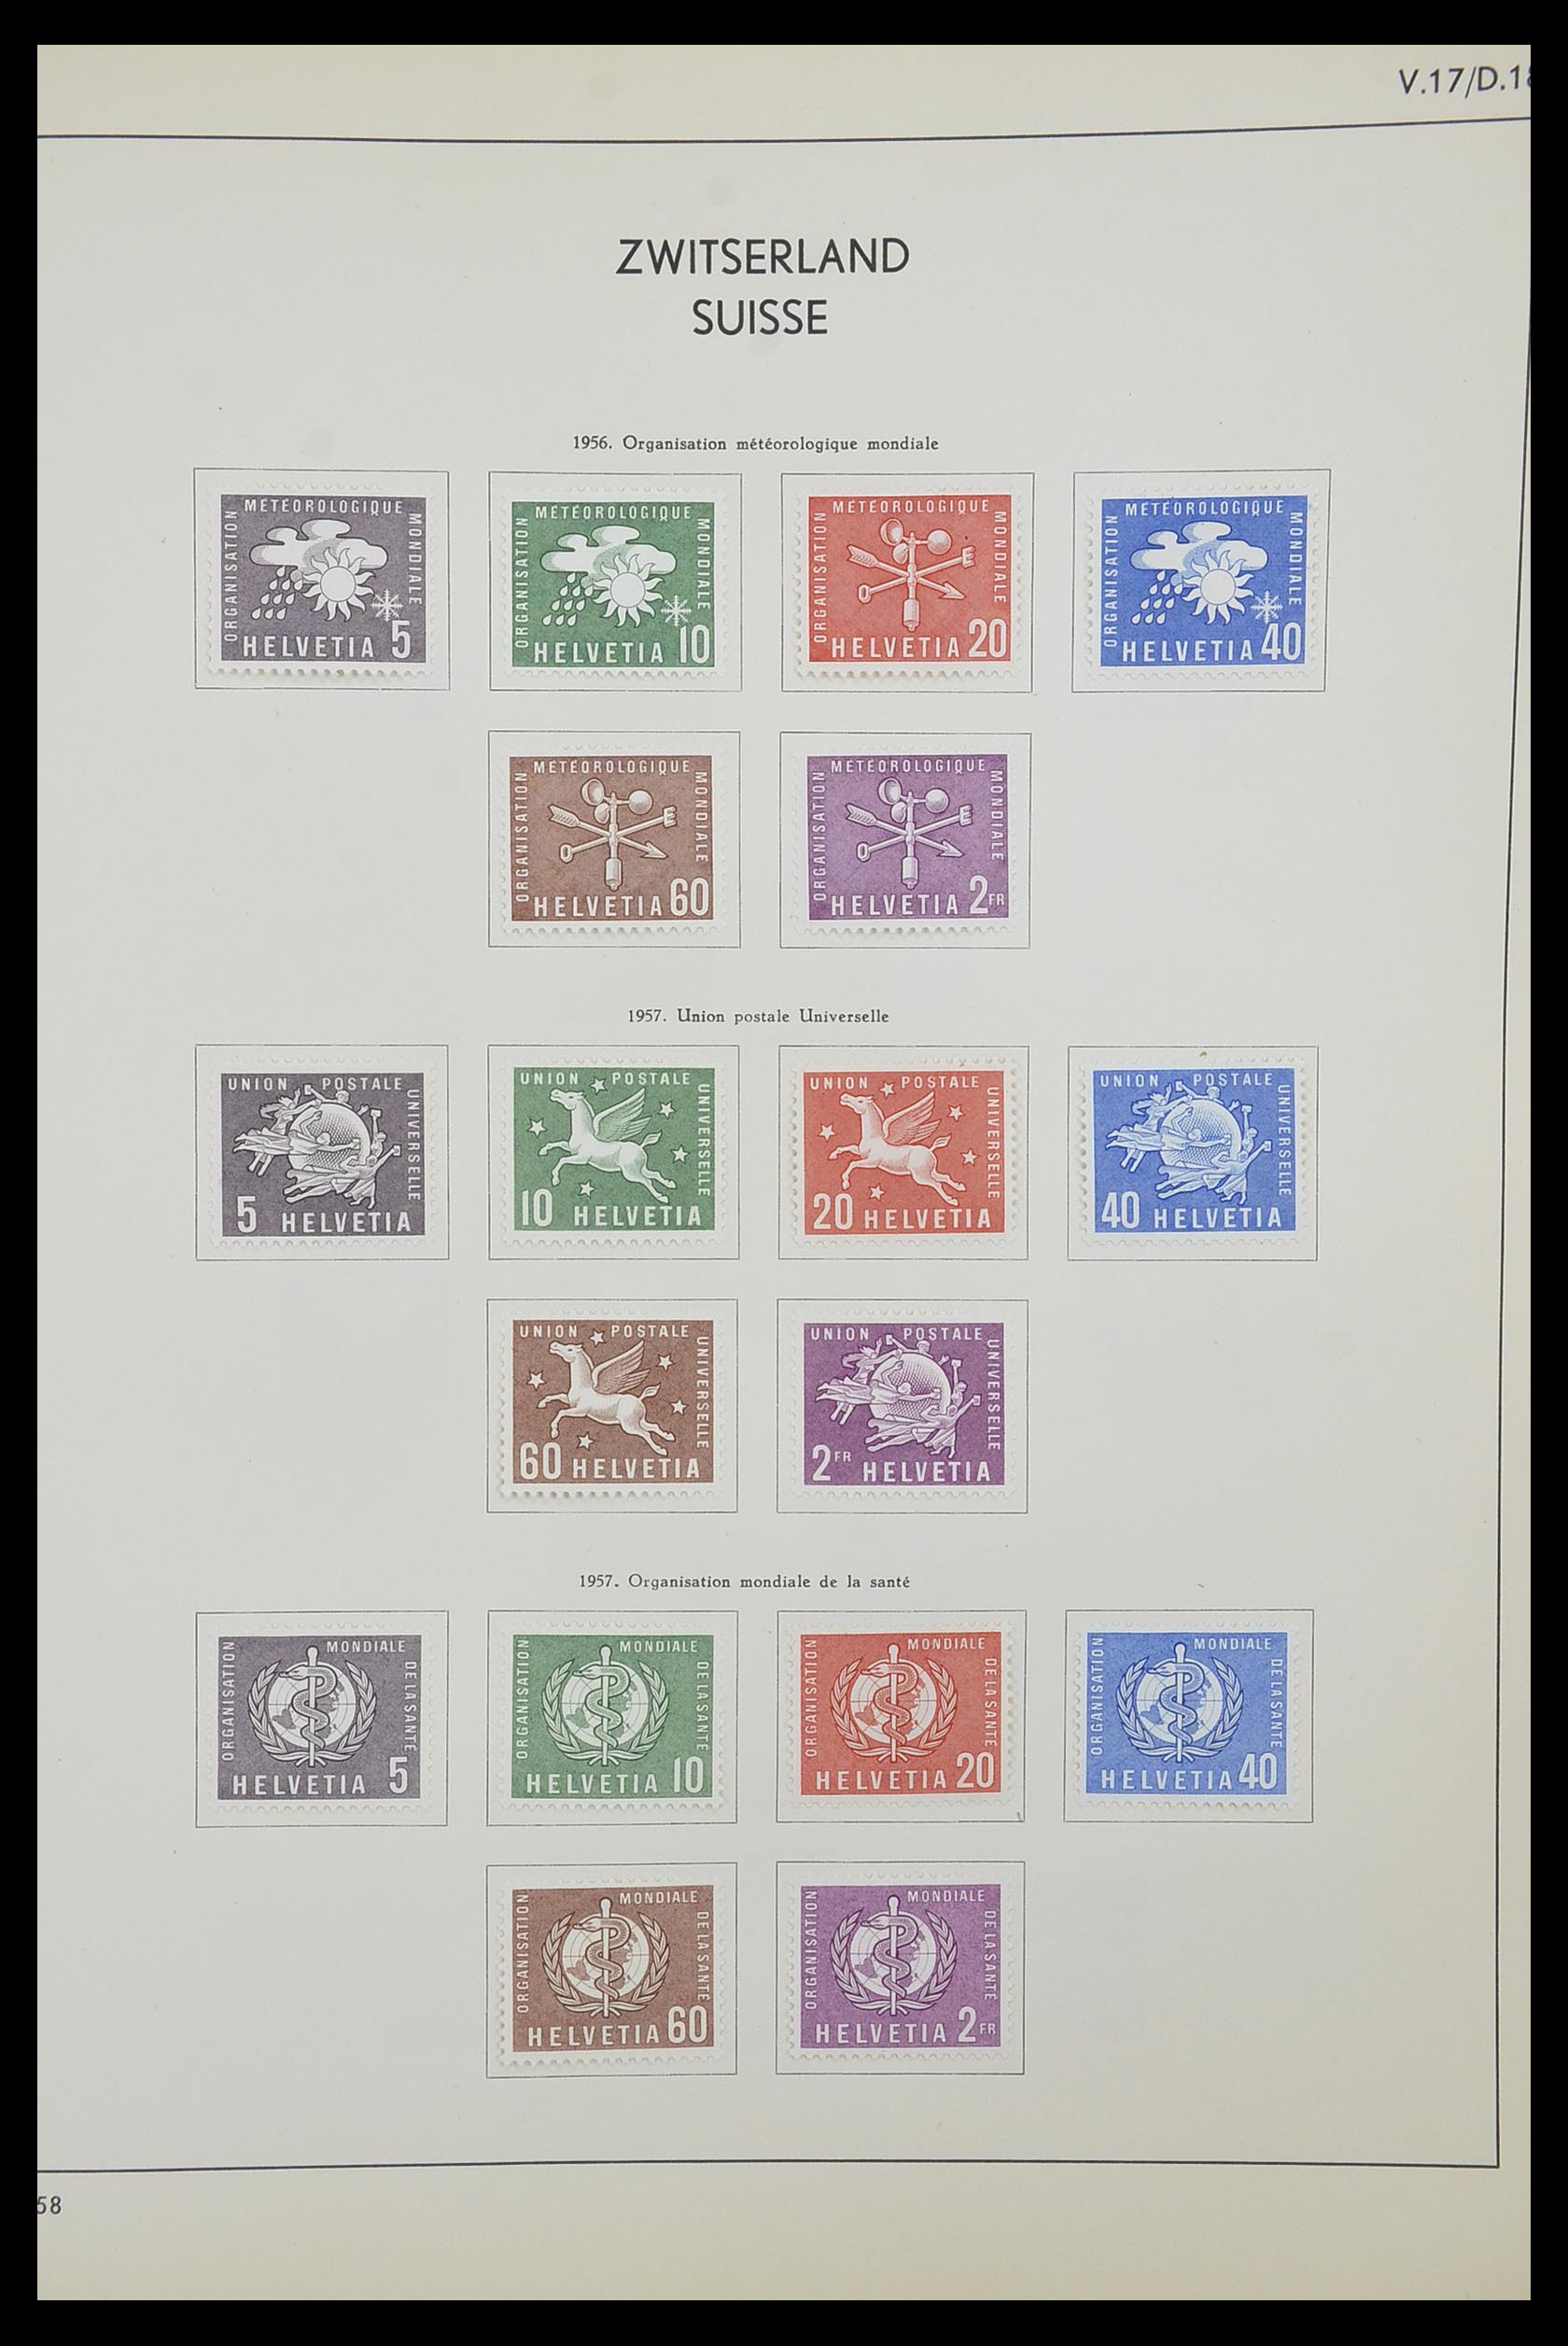 33601 117 - Stamp collection 33601 Switzerland 1854-1985.